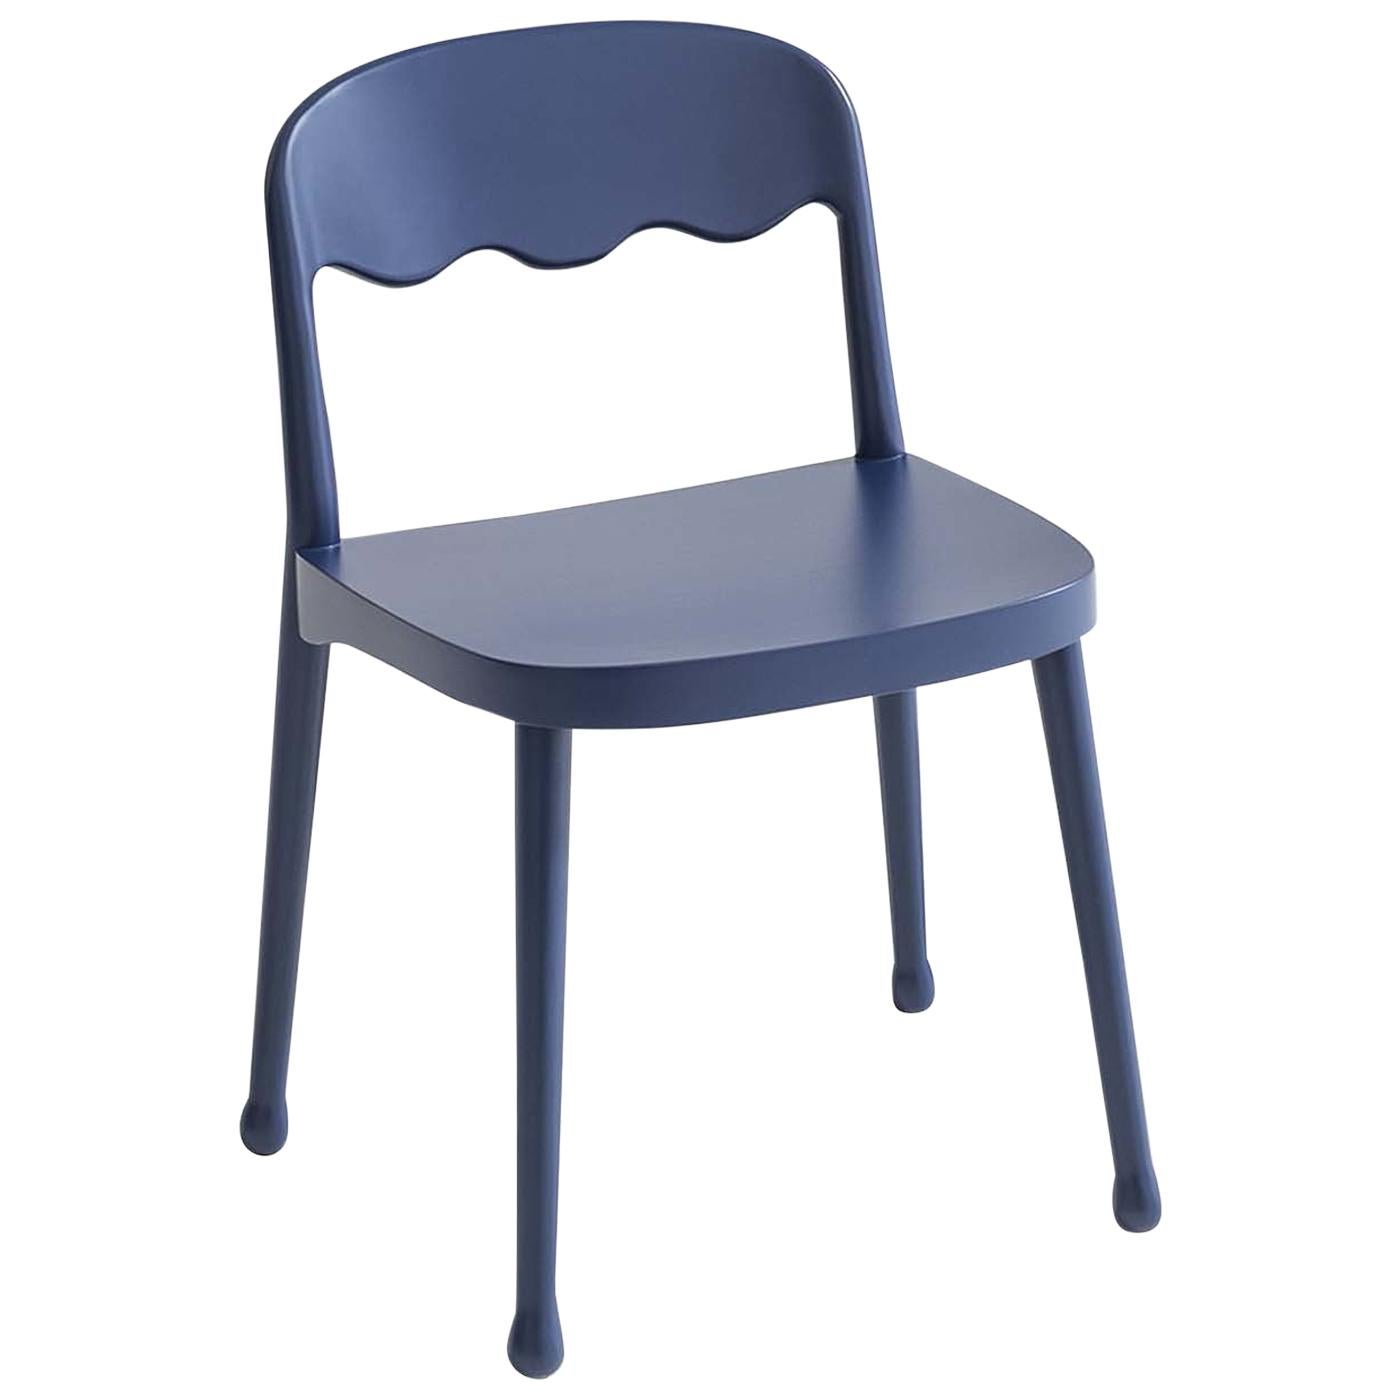 Cristina Celestino Chairs